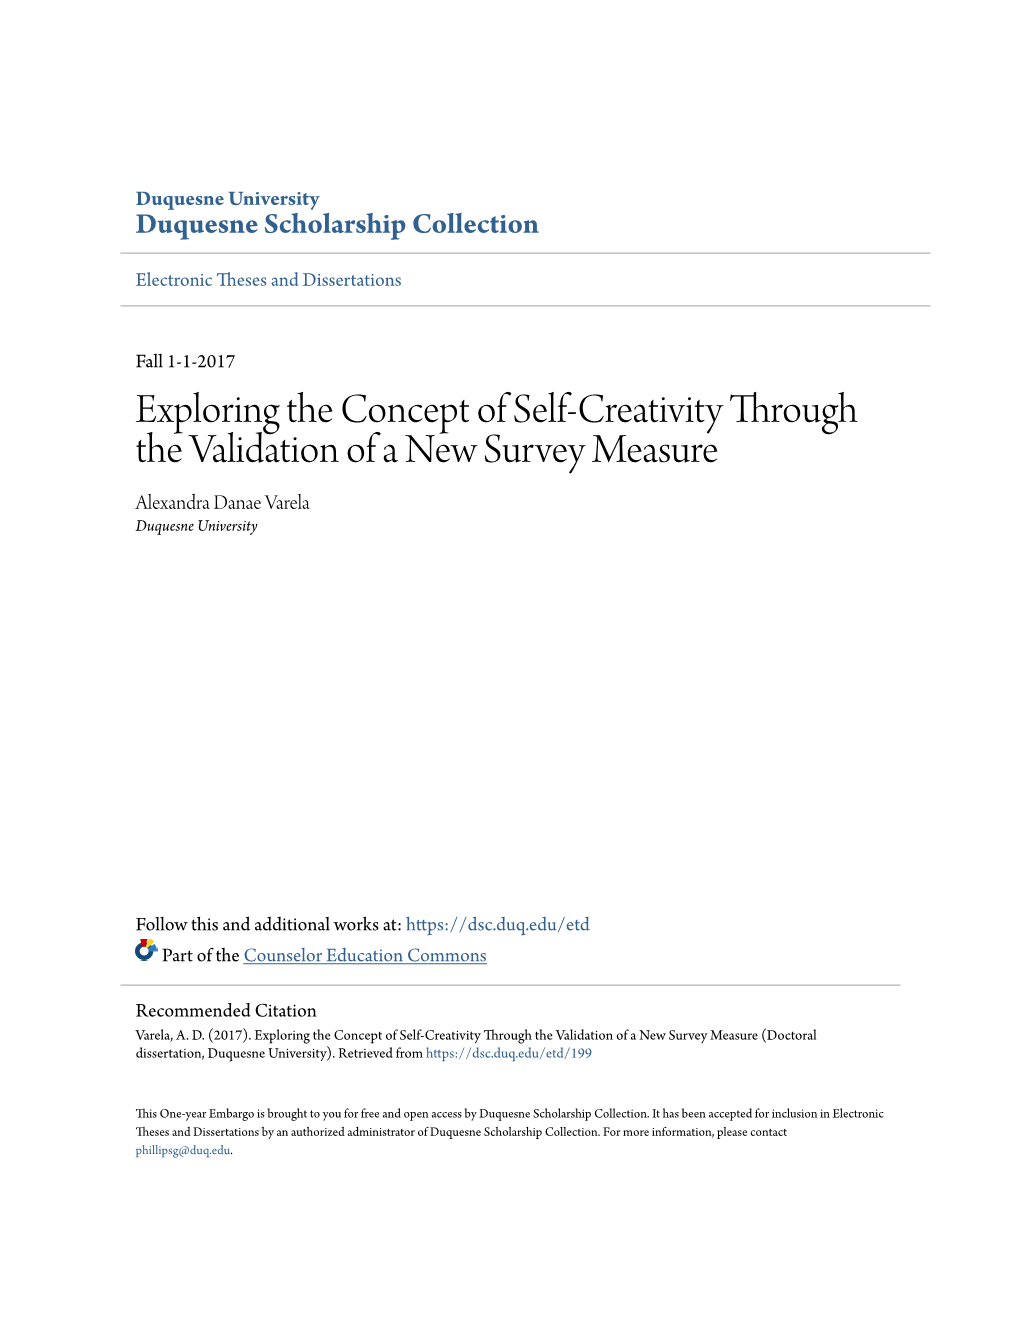 Exploring the Concept of Self-Creativity Through the Validation of a New Survey Measure Alexandra Danae Varela Duquesne University